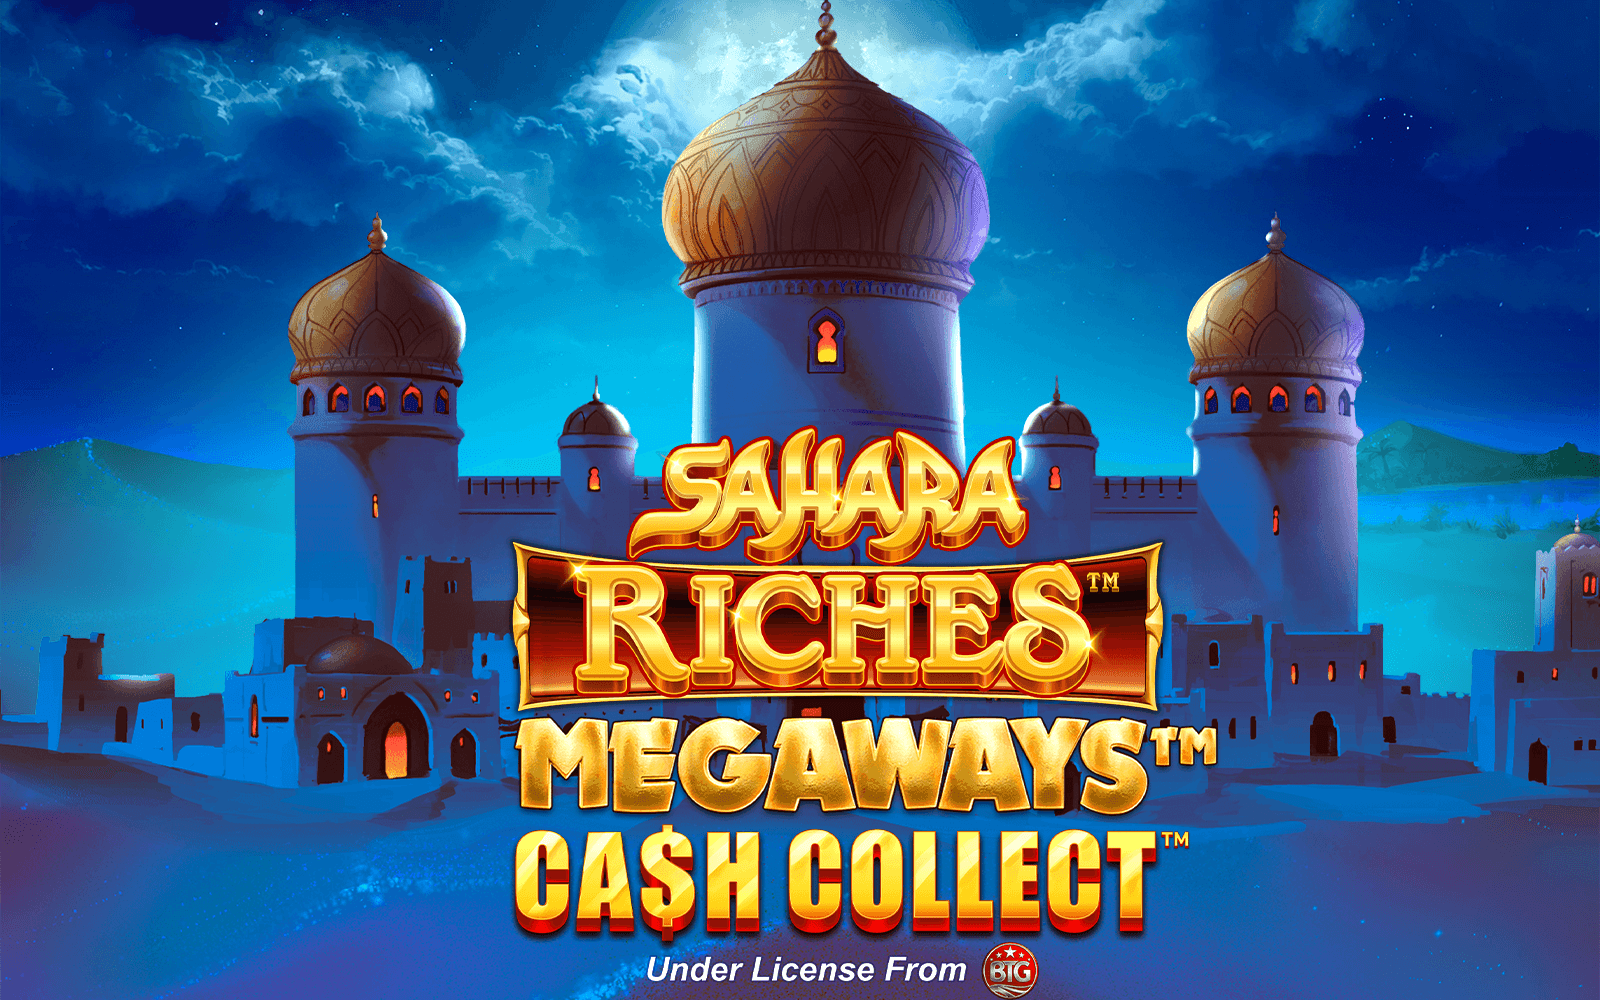 Gioca a Sahara Riches MegaWays™: Cash Collect™ sul casino online Starcasino.be